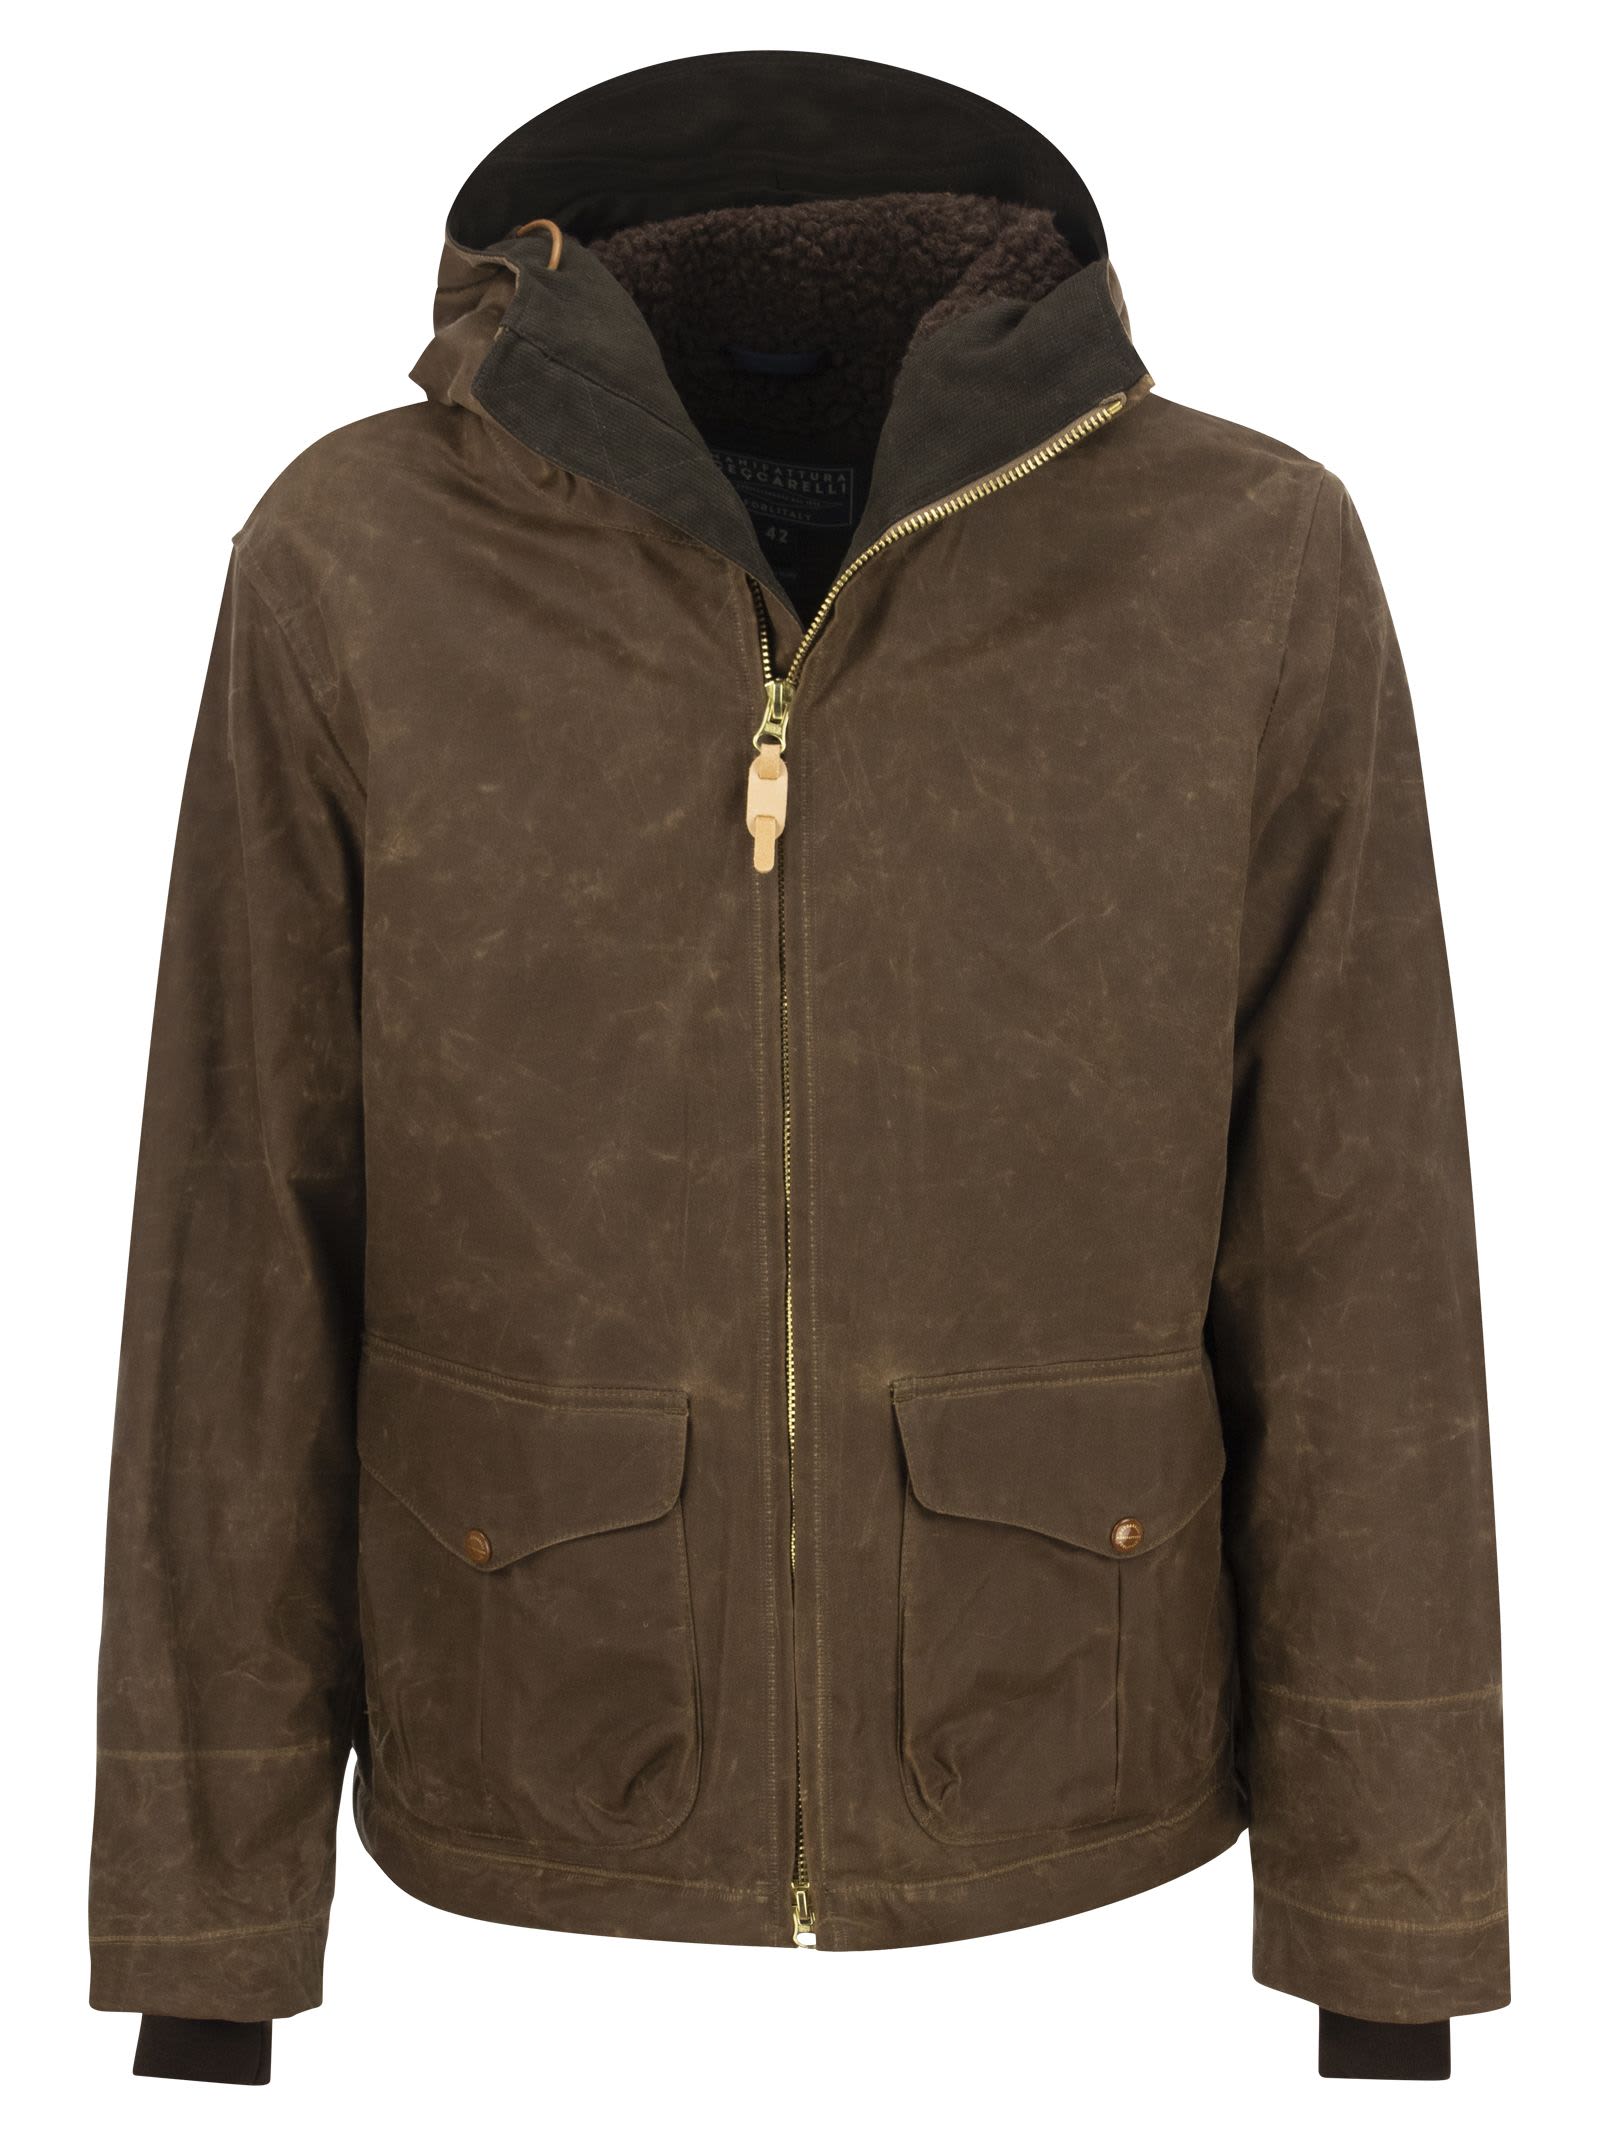 Manifattura Ceccarelli Blazer Coat - Hooded Jacket